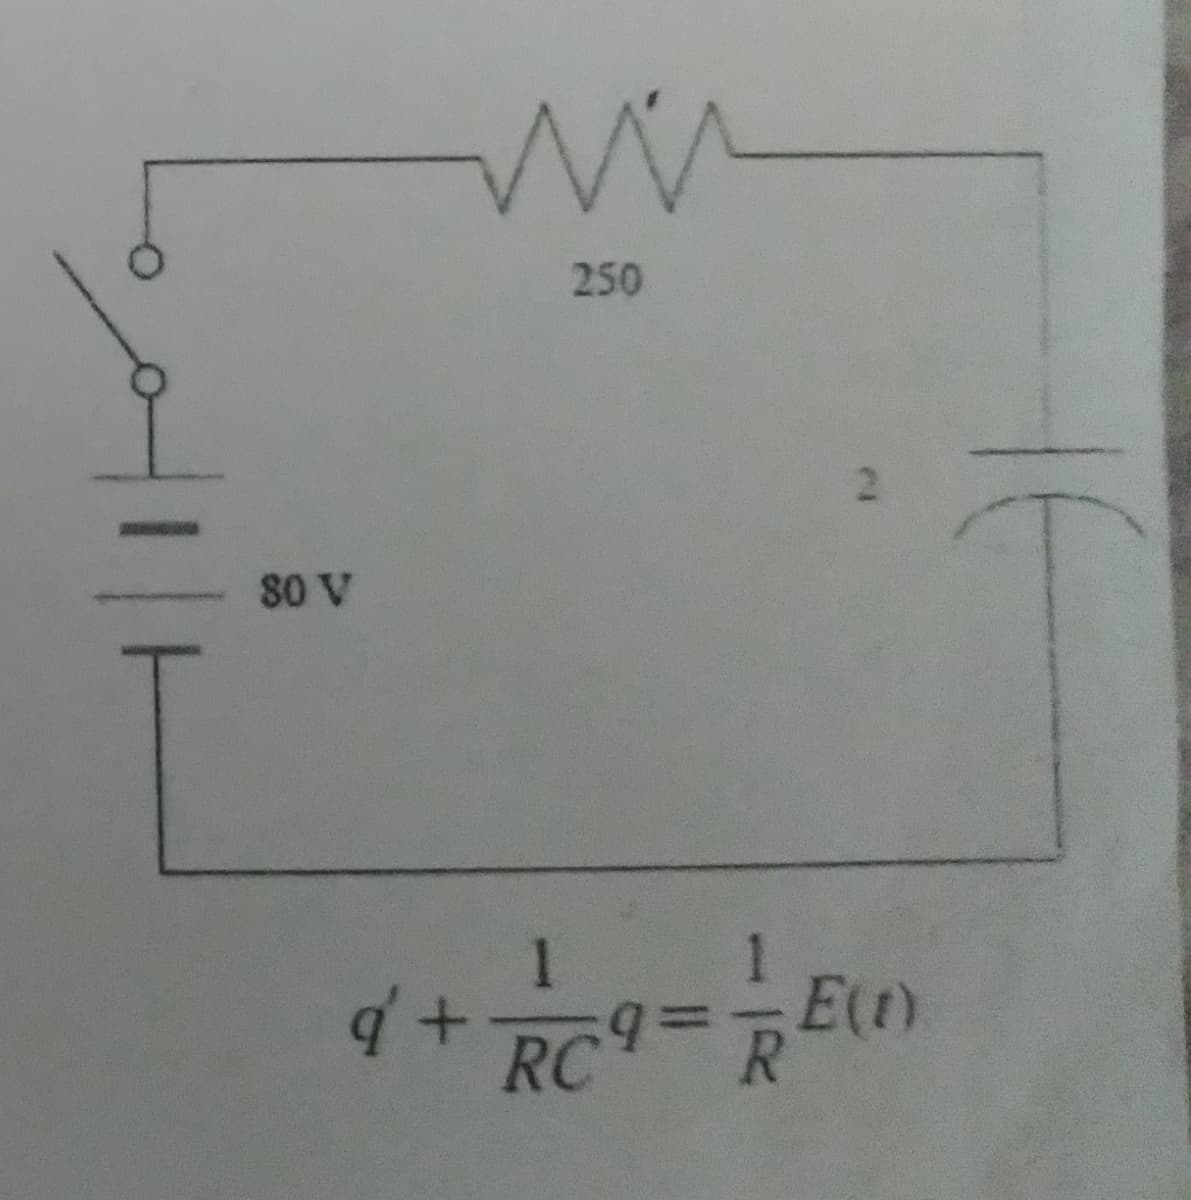 80 V
ww
250
2
4+1/9-1/2 Ein
RC9= R
q+
E(1)